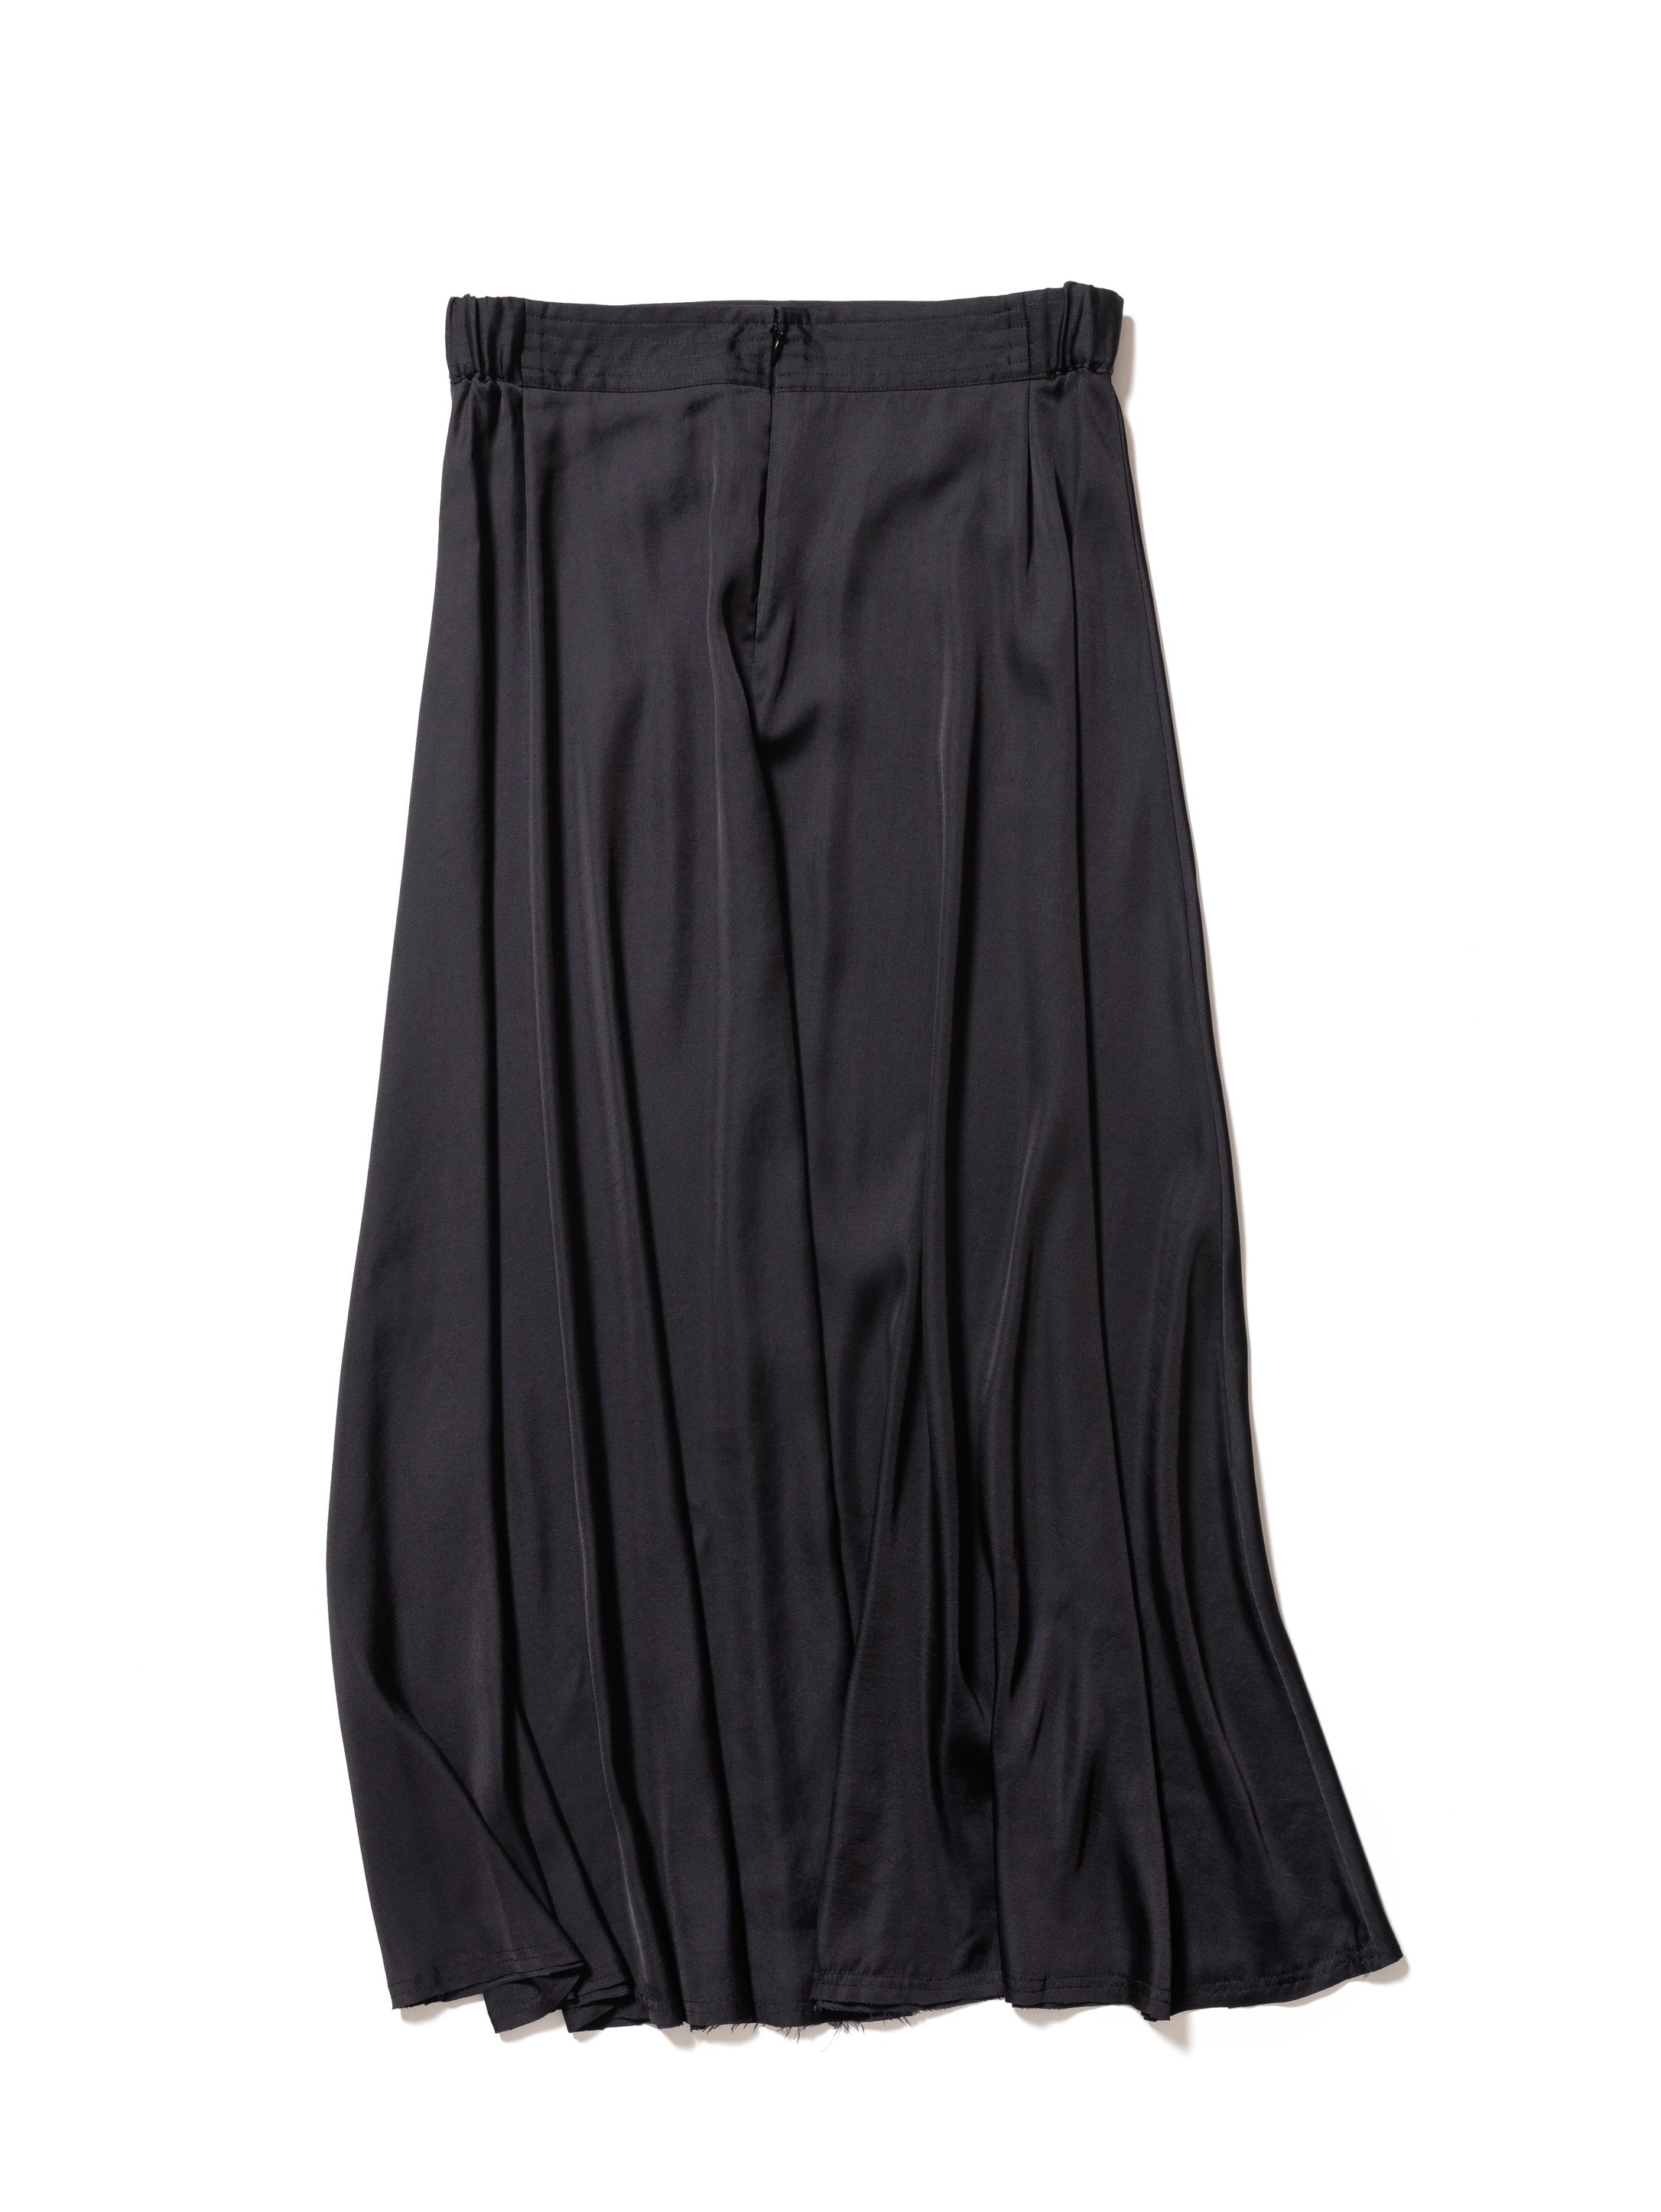 Vintage satin long skirt / NAVY